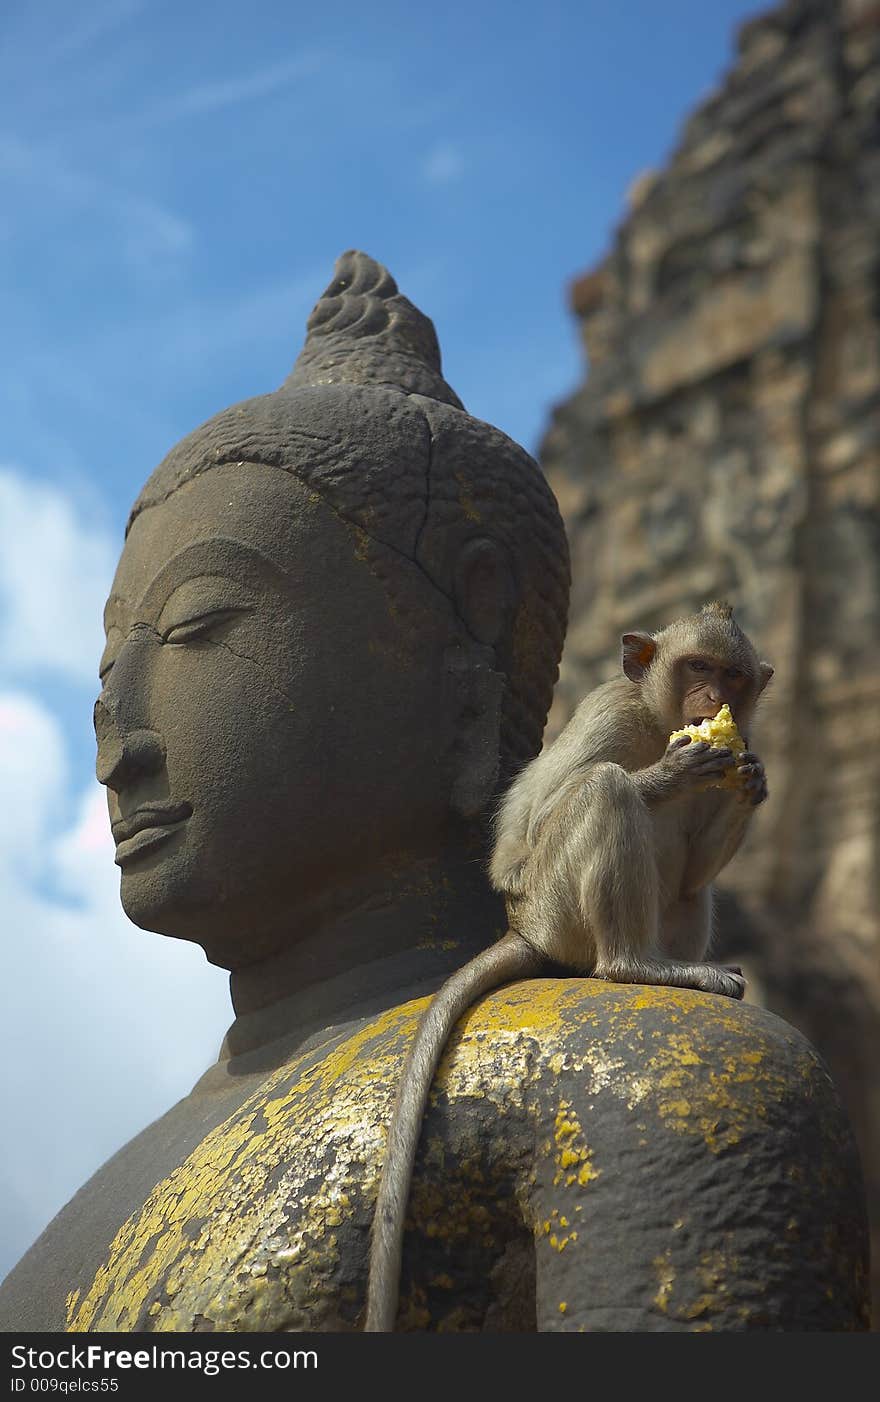 Monkey living in kala wat shrine in lopburi town, Thailand